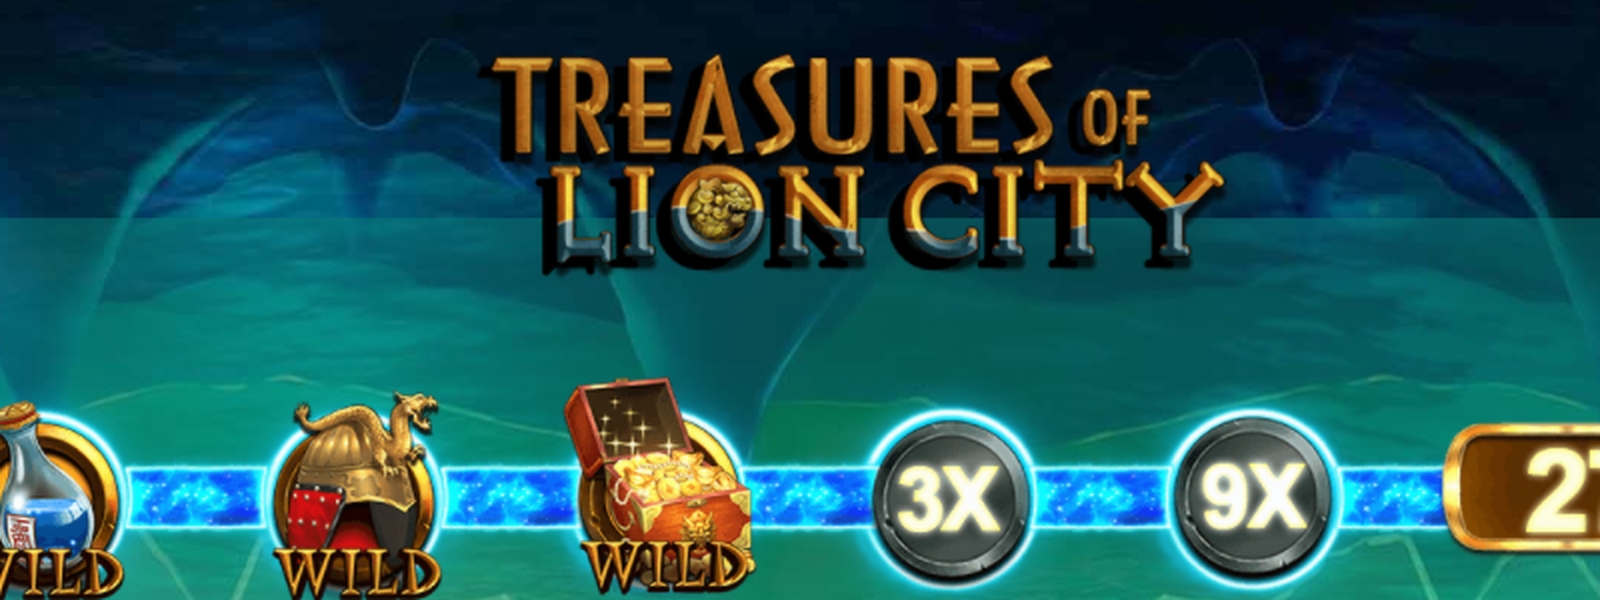 Treasures Of Lion City demo